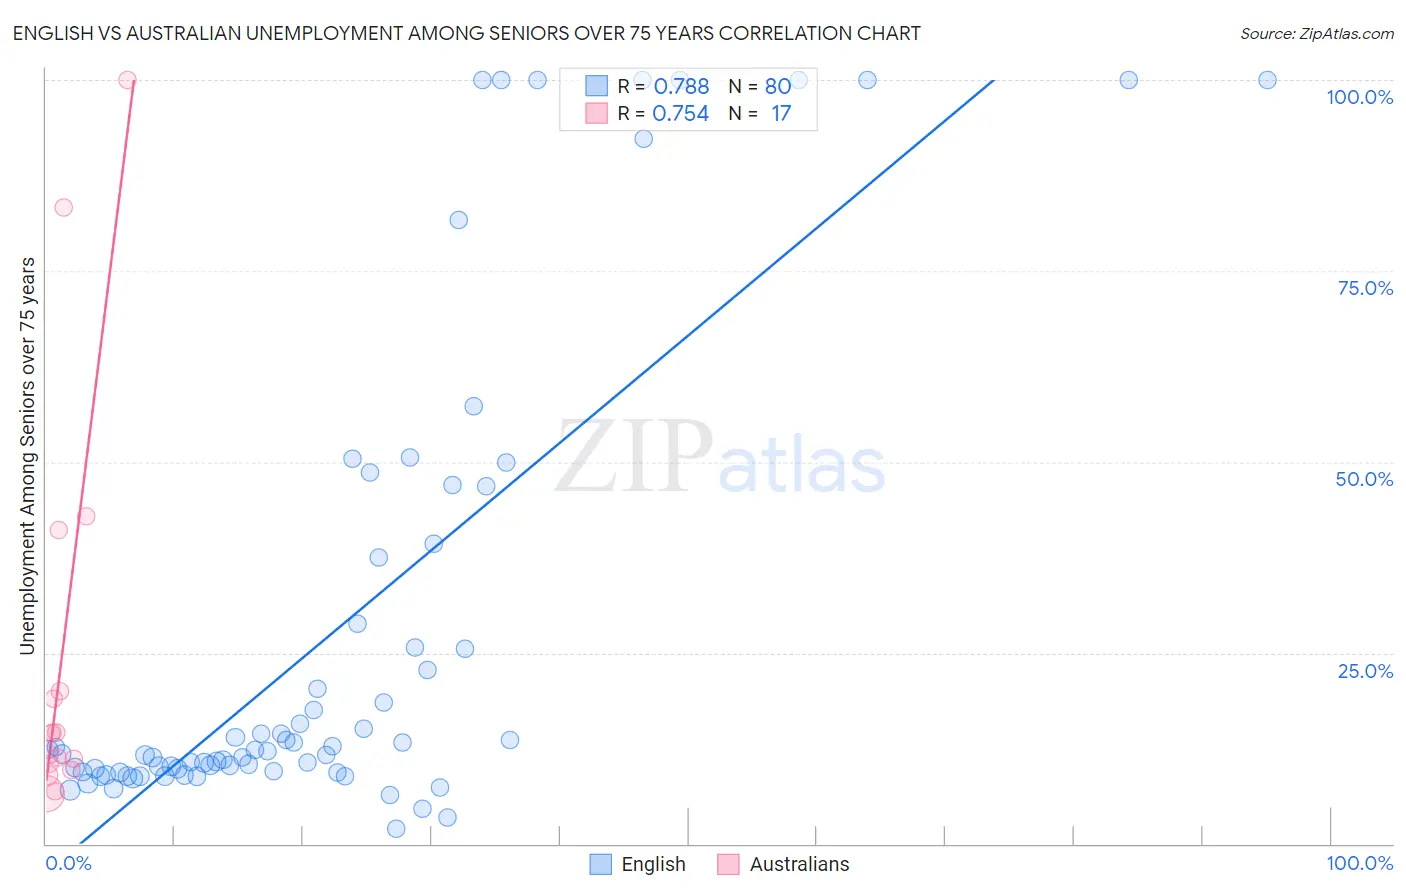 English vs Australian Unemployment Among Seniors over 75 years